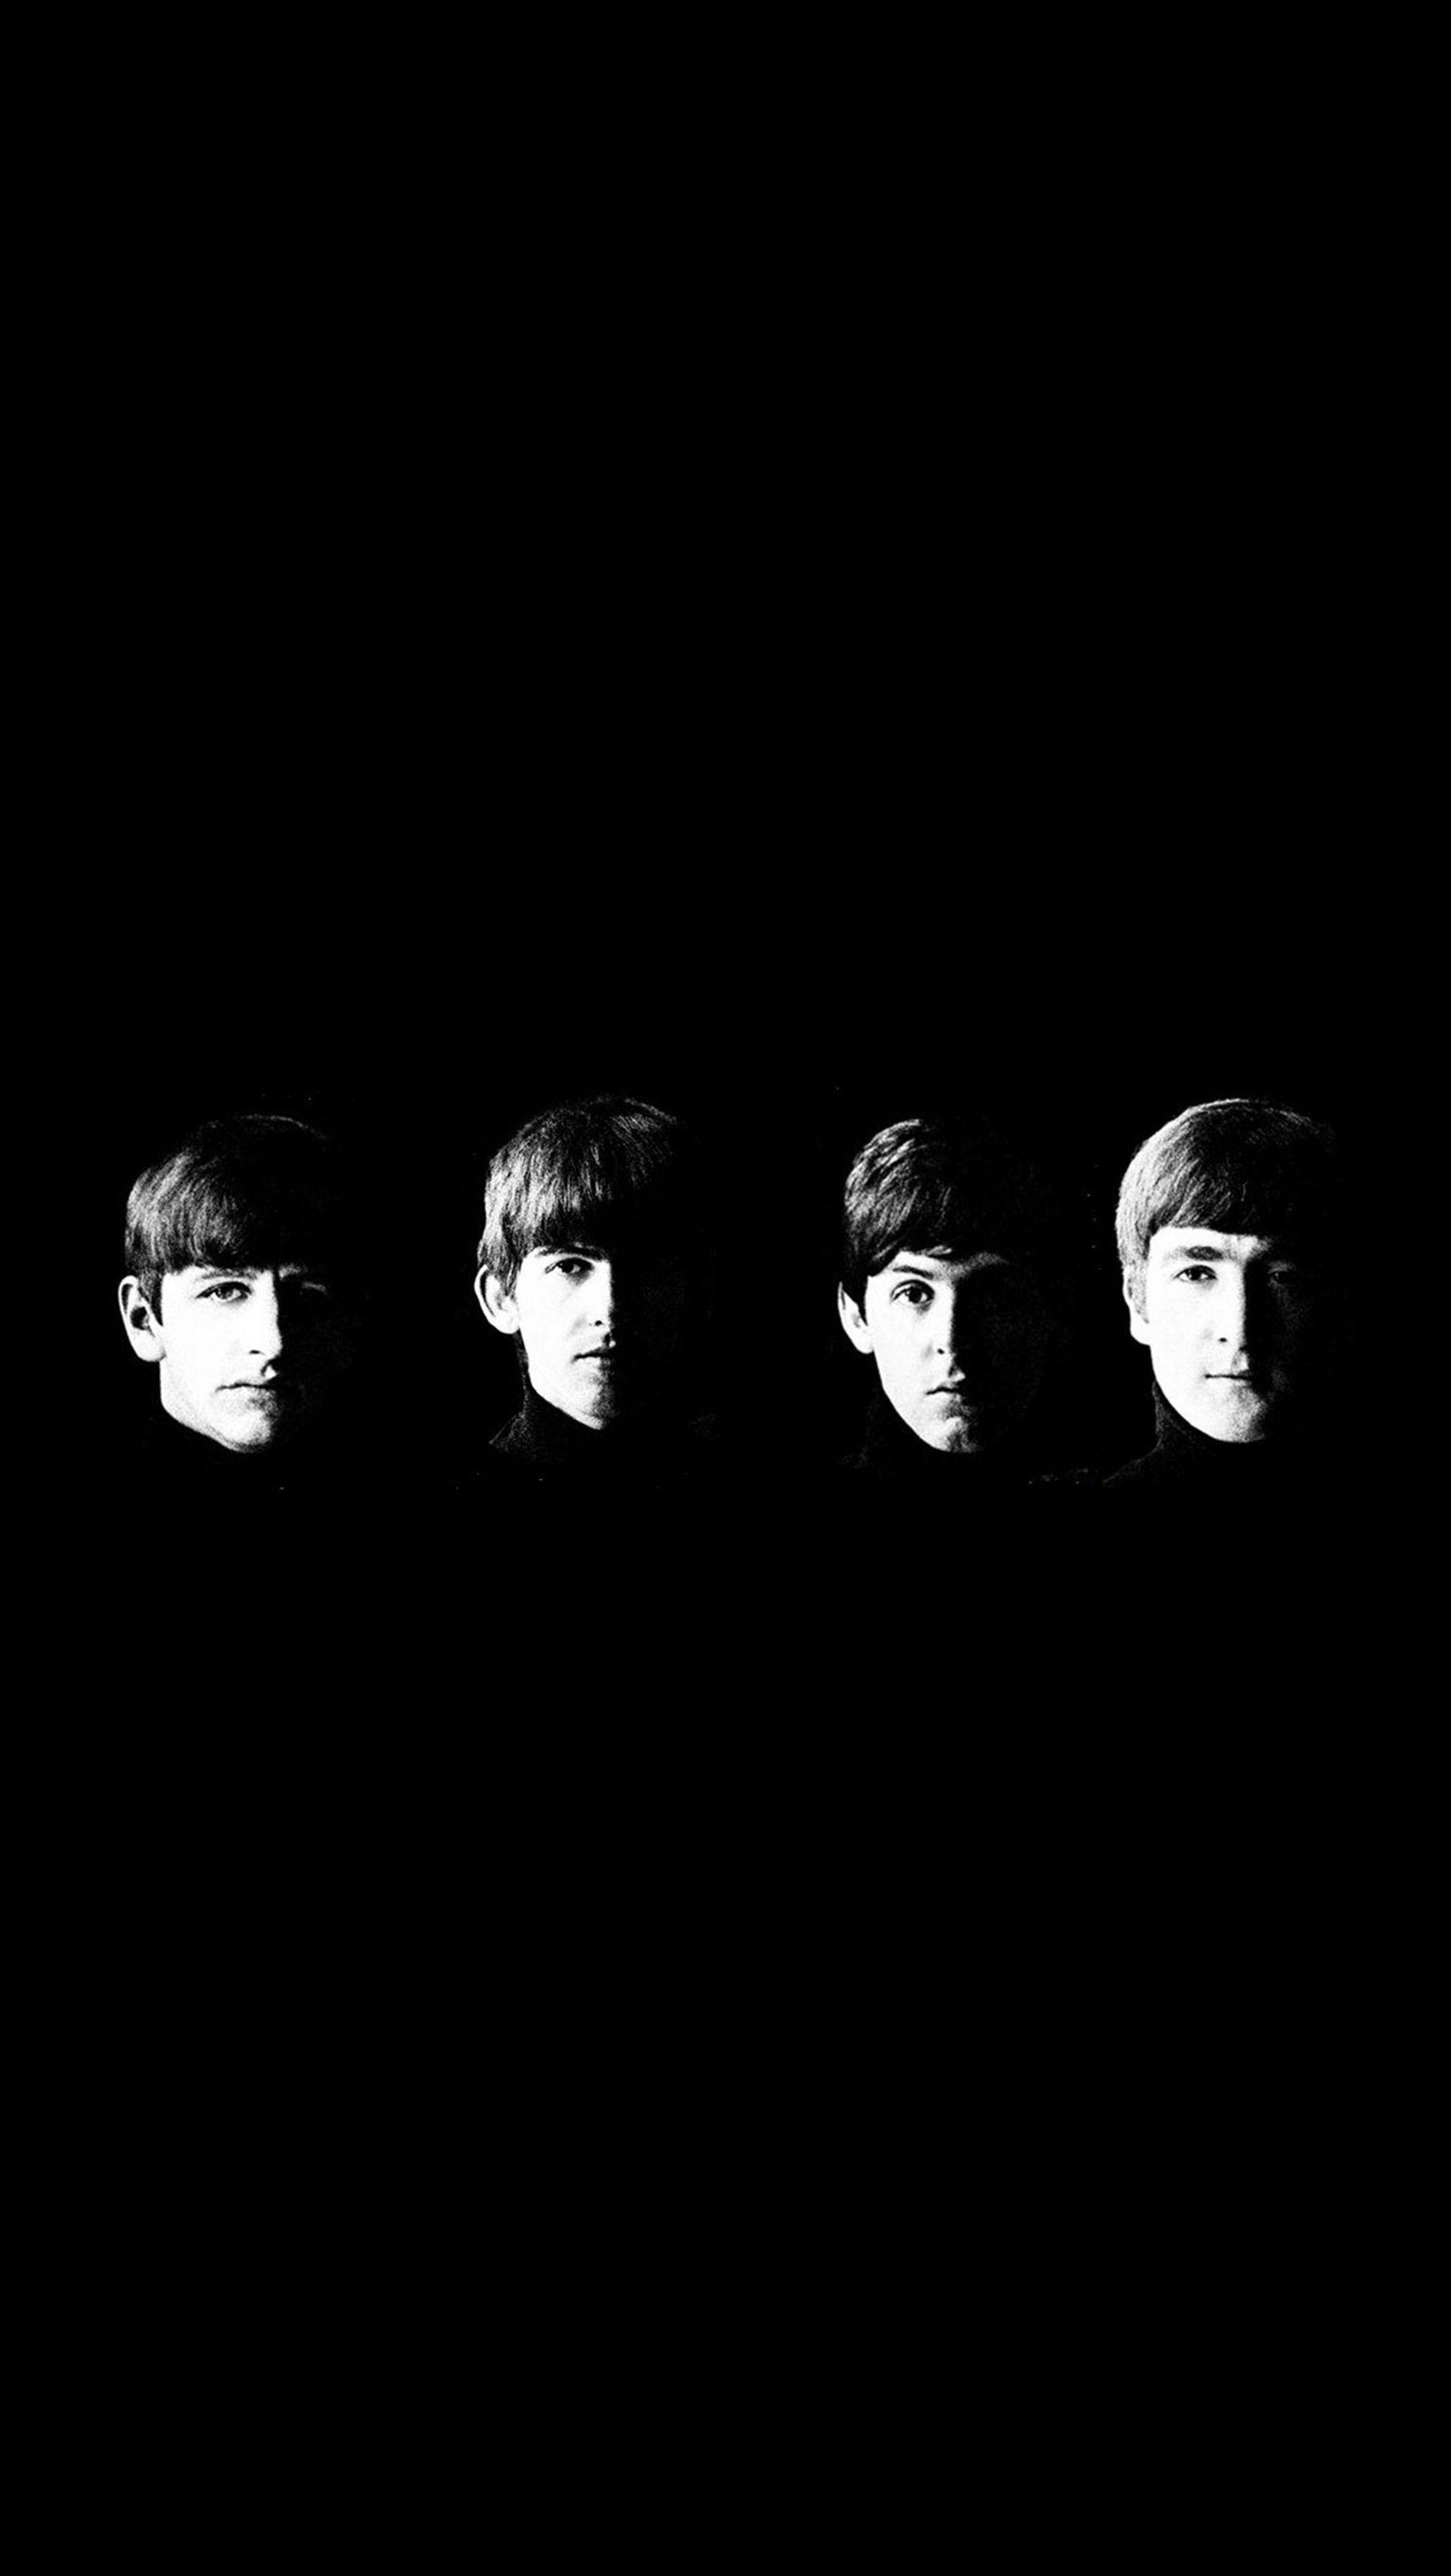 Beatles iPhone Wallpaper